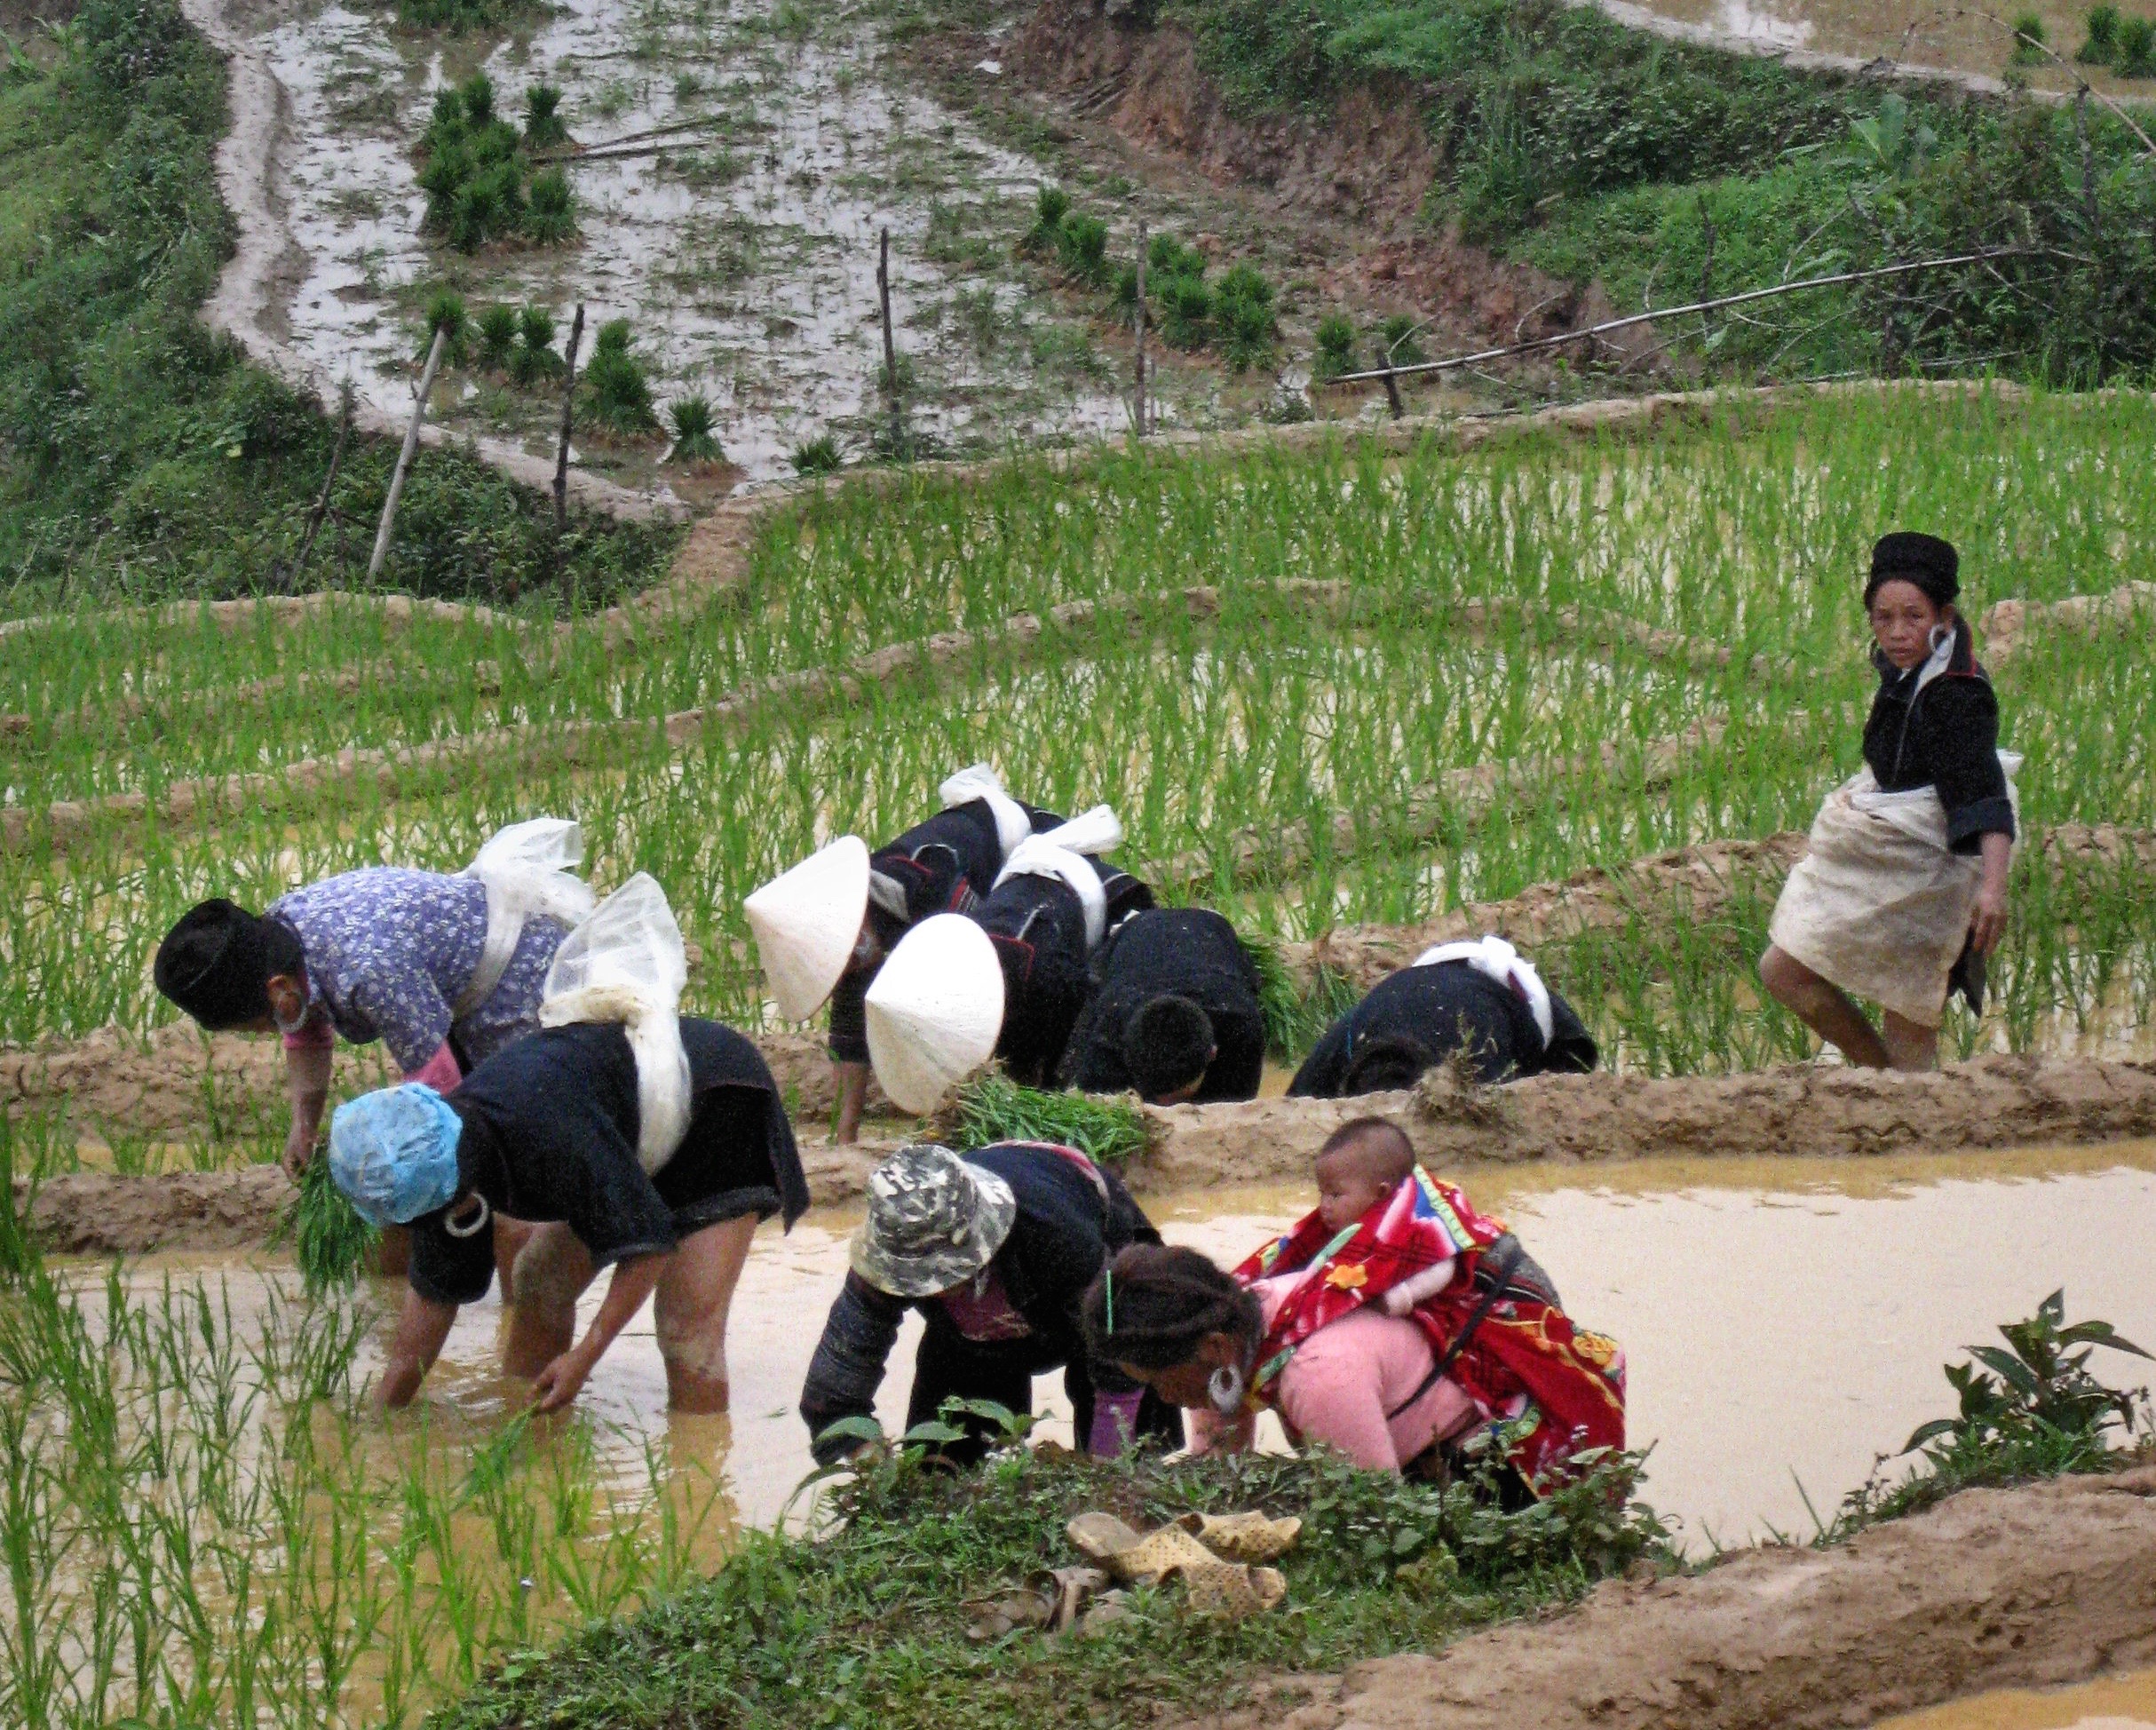 Women working in the paddies. Photos by Scott McIntire.